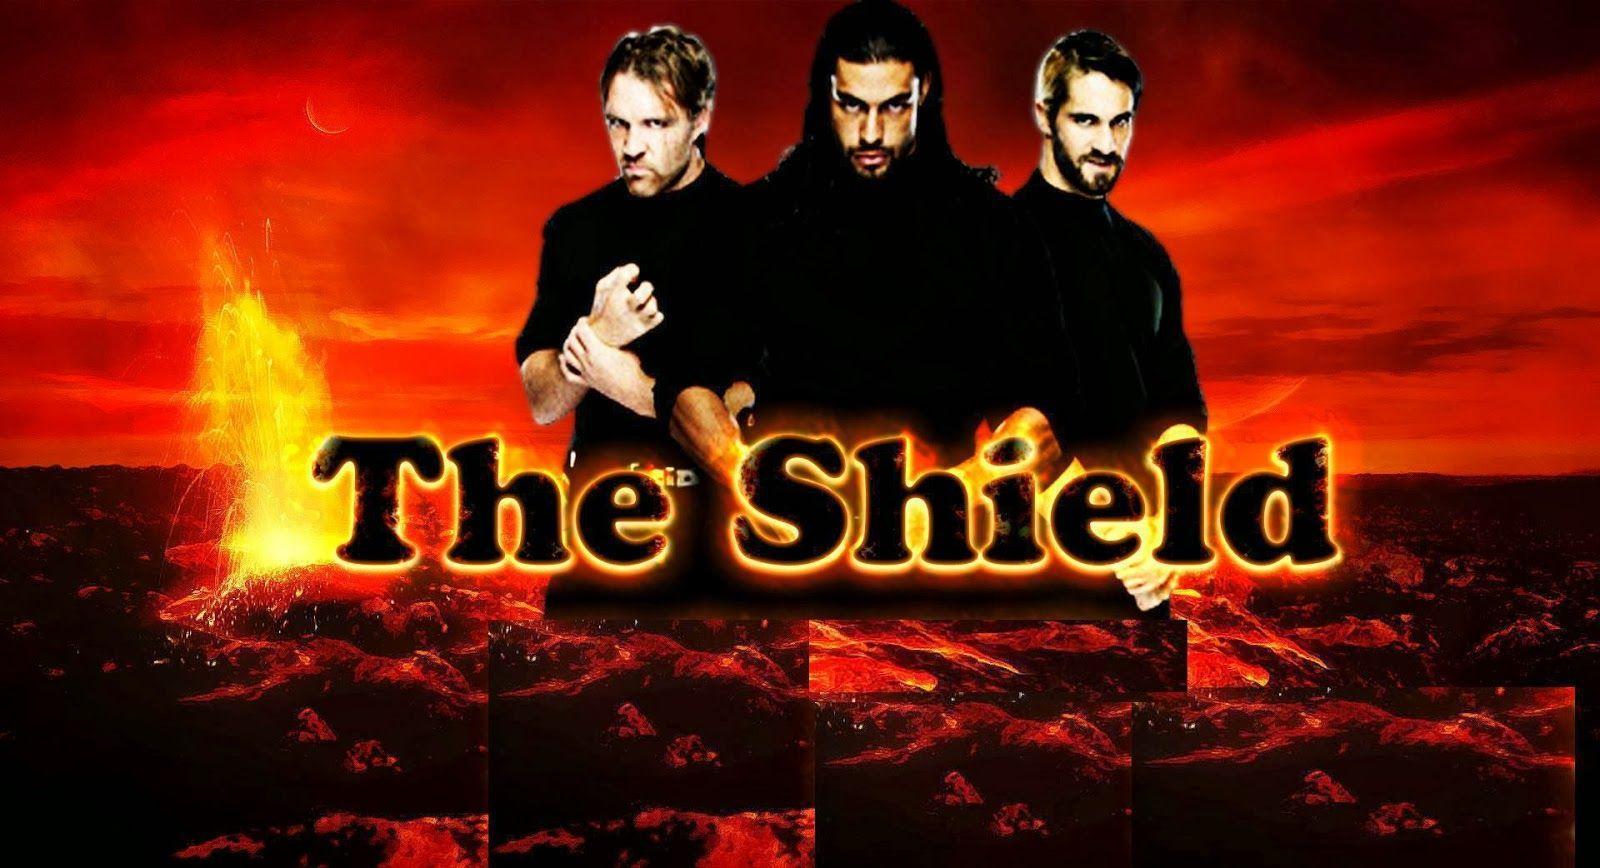 The Shield HD Wallpaper Free Download. WWE HD WALLPAPER FREE